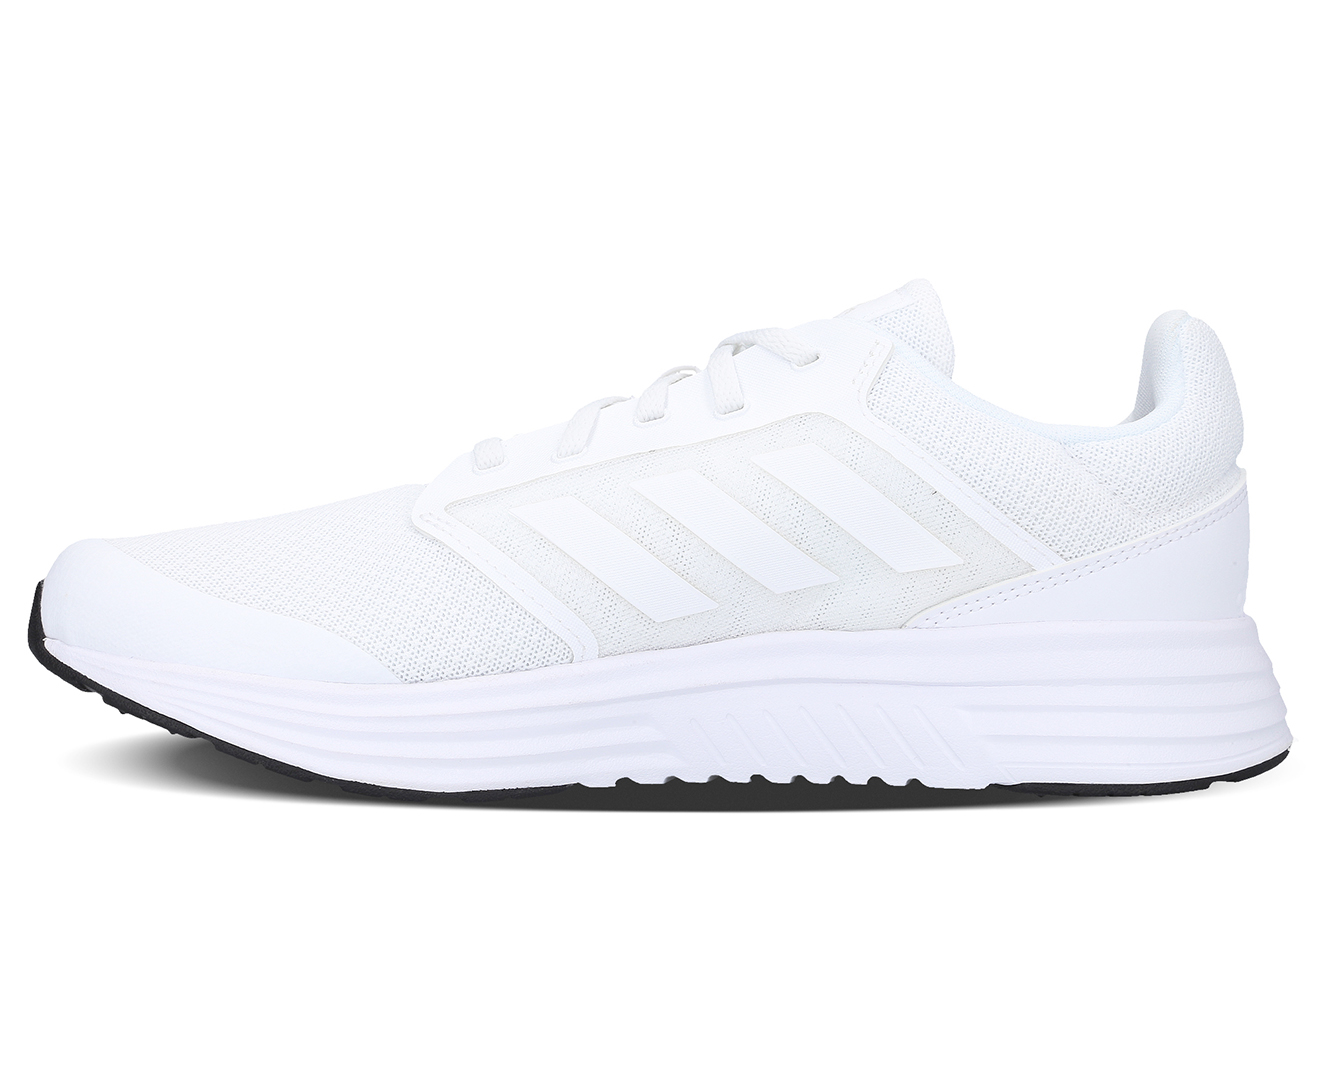 Adidas Men's Galaxy 5 Running Shoes - White | Catch.com.au